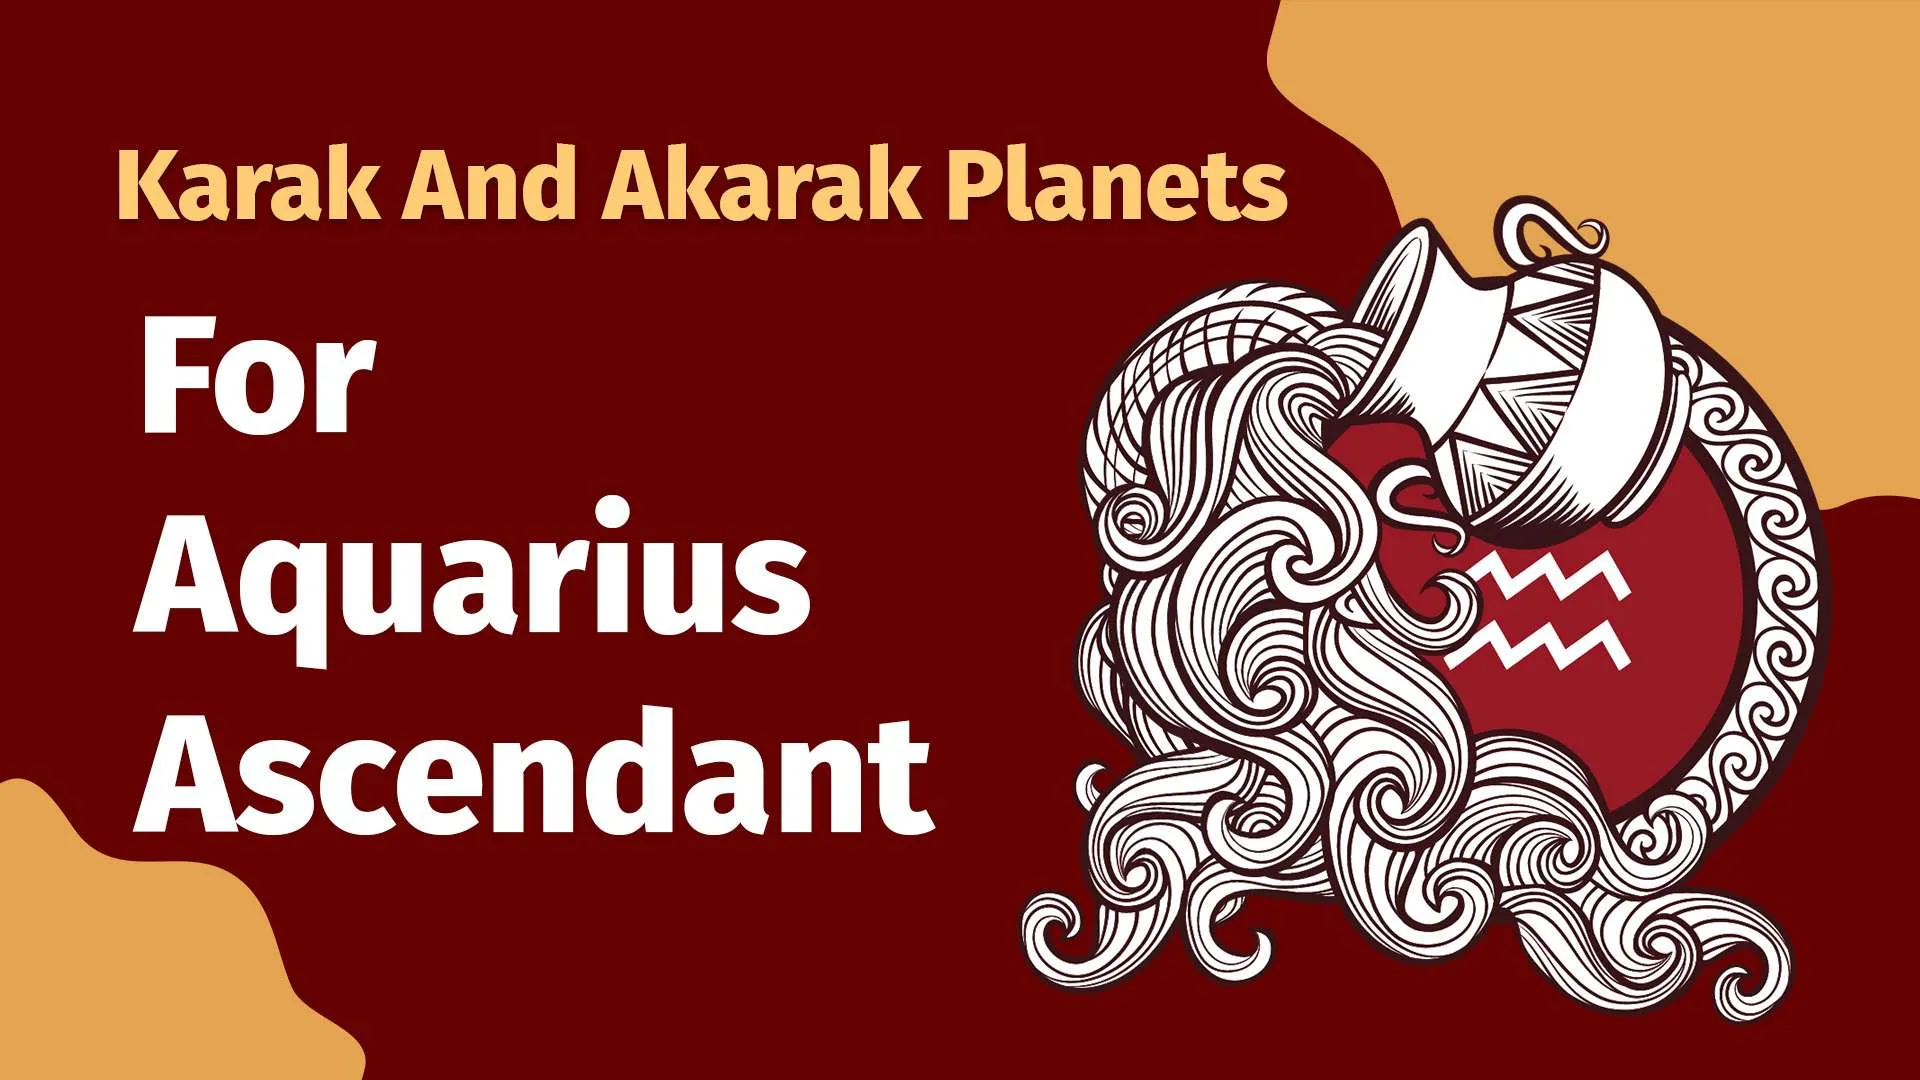 Karak and Akarak planets for Aquarius Ascendant